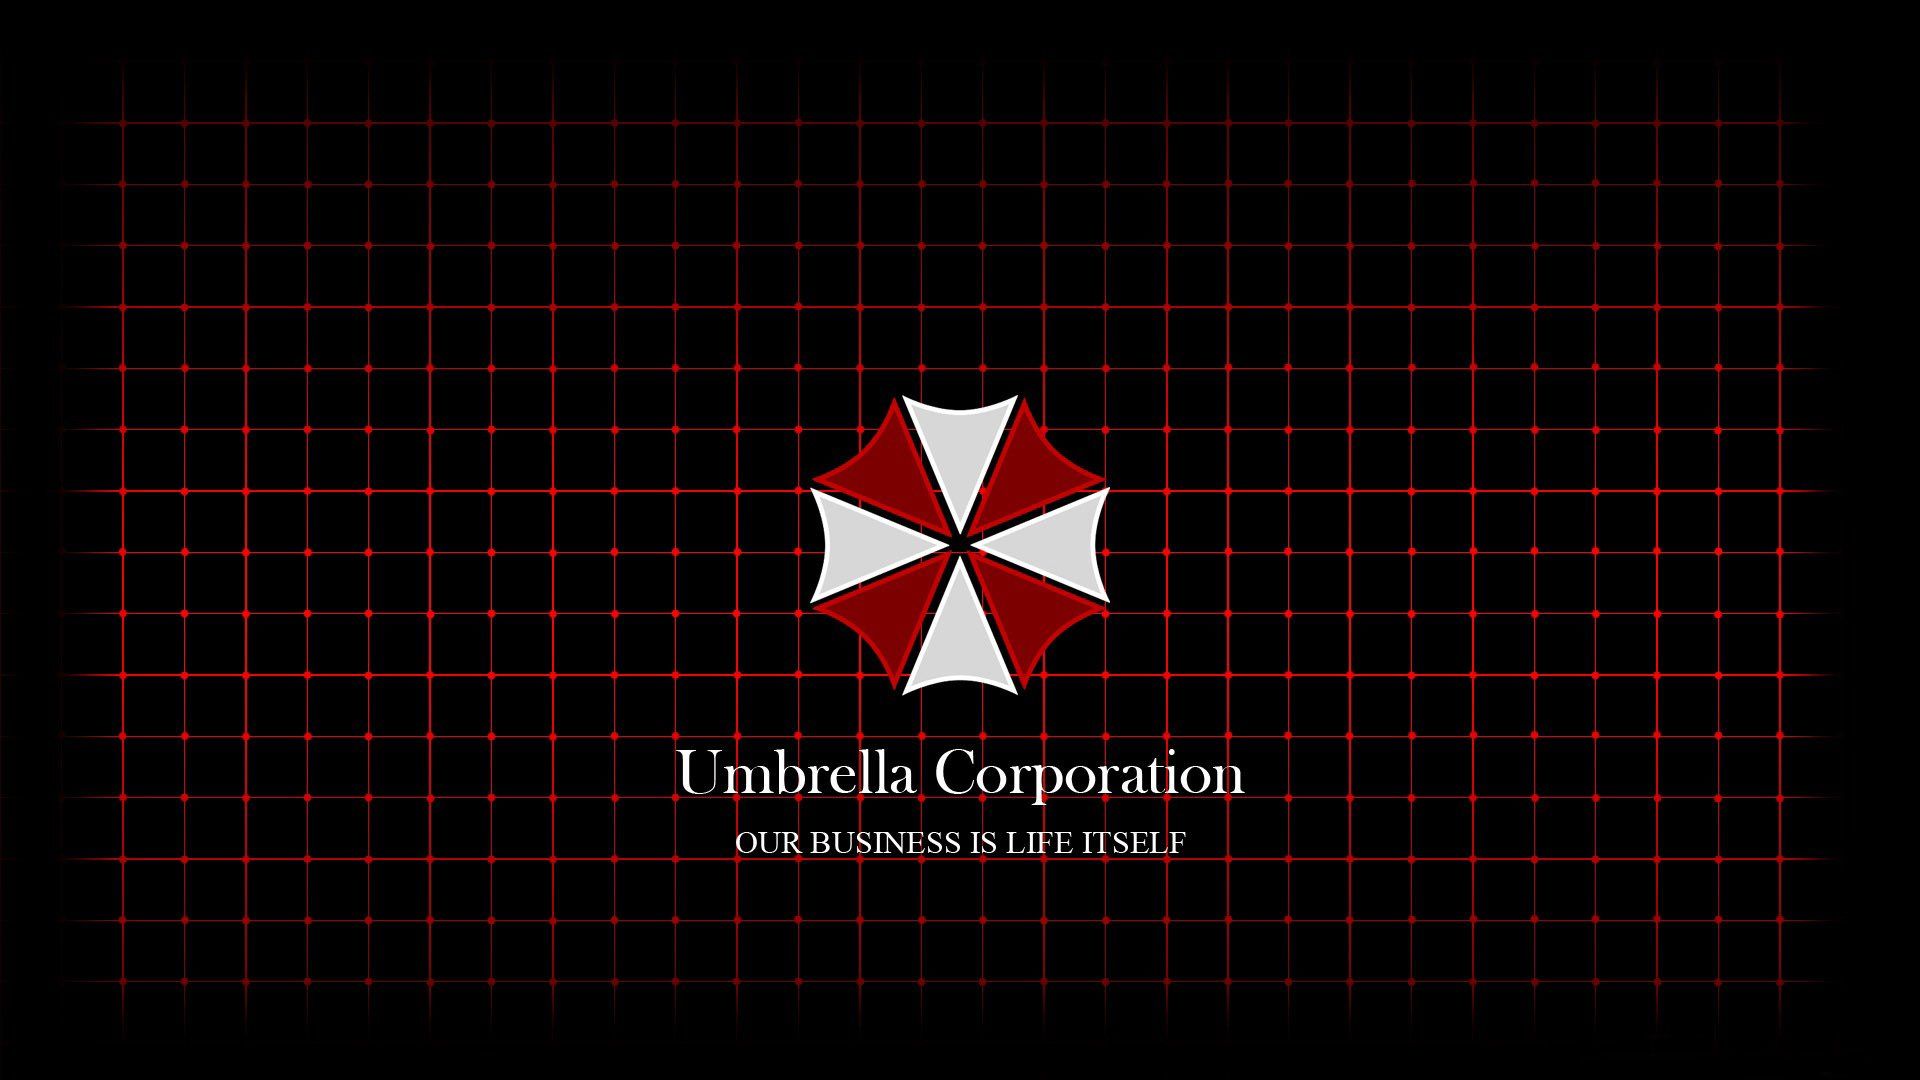 Resident Evil Umbrella Logo Wallpaper Free Resident Evil Umbrella Logo Background